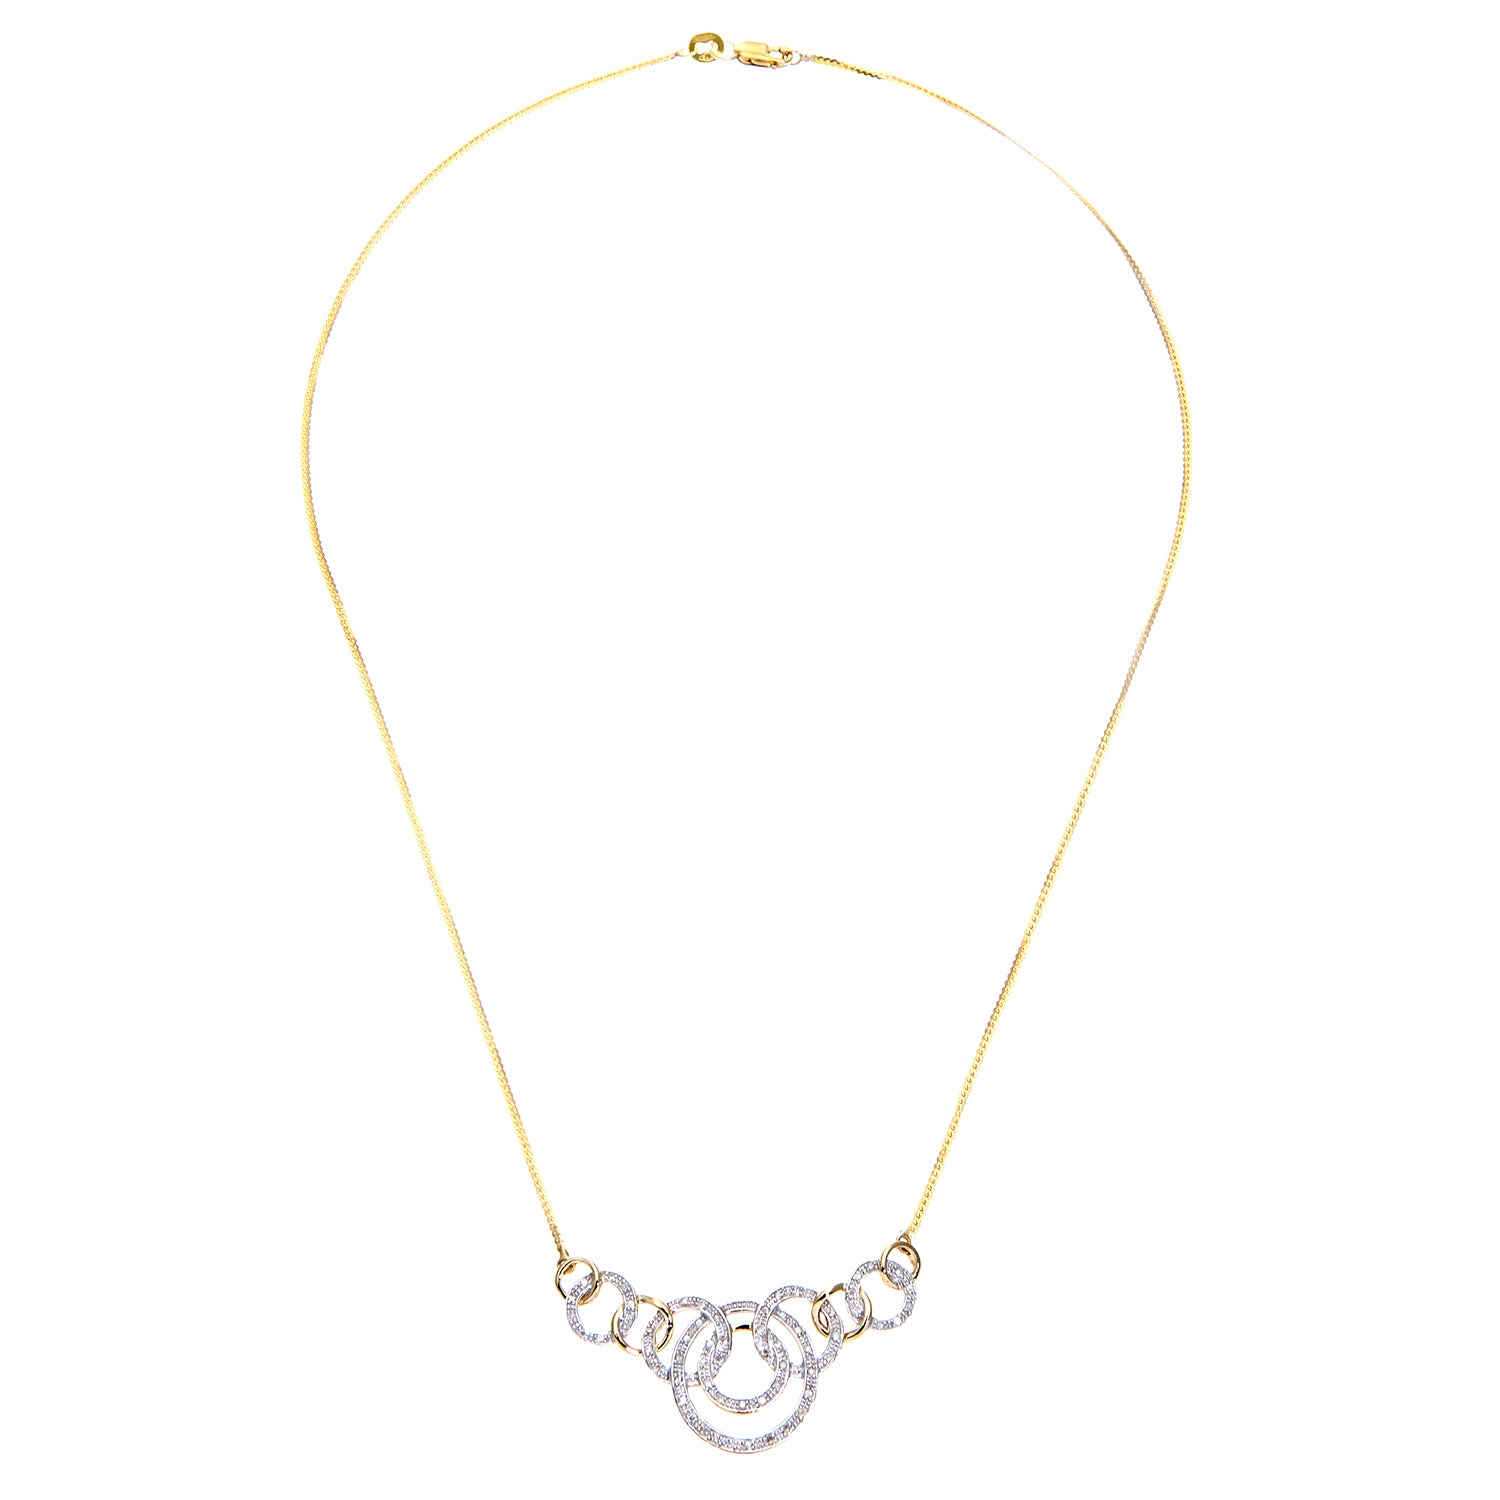 9ct Gold  Round 1/4ct Diamond Circle Lavalier Necklace 18 inch - PNEAXL01554Y